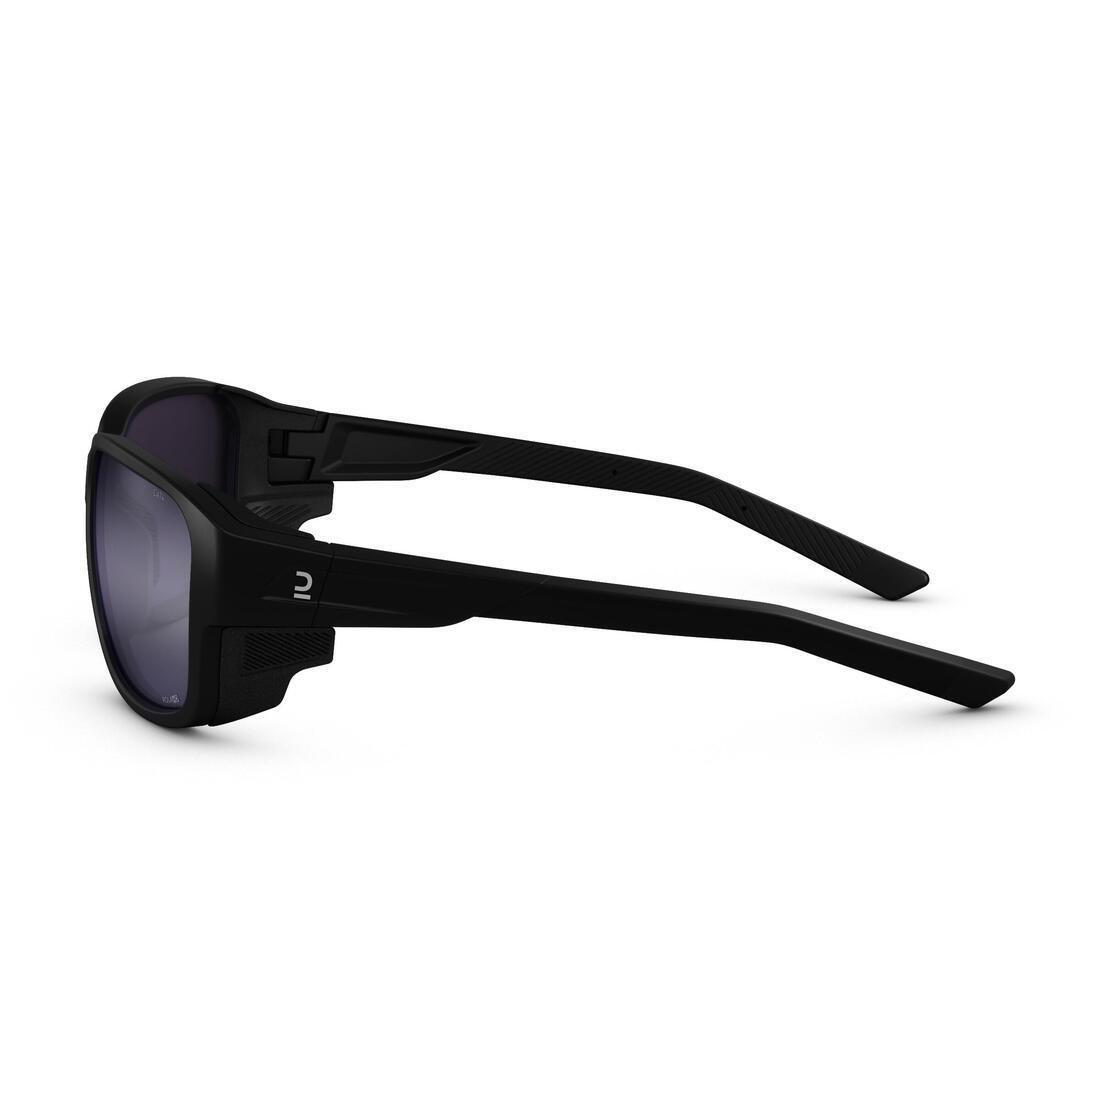 QUECHUA - Adult Hiking Sunglasses - Mh570 - Category 4 Polarised, Black